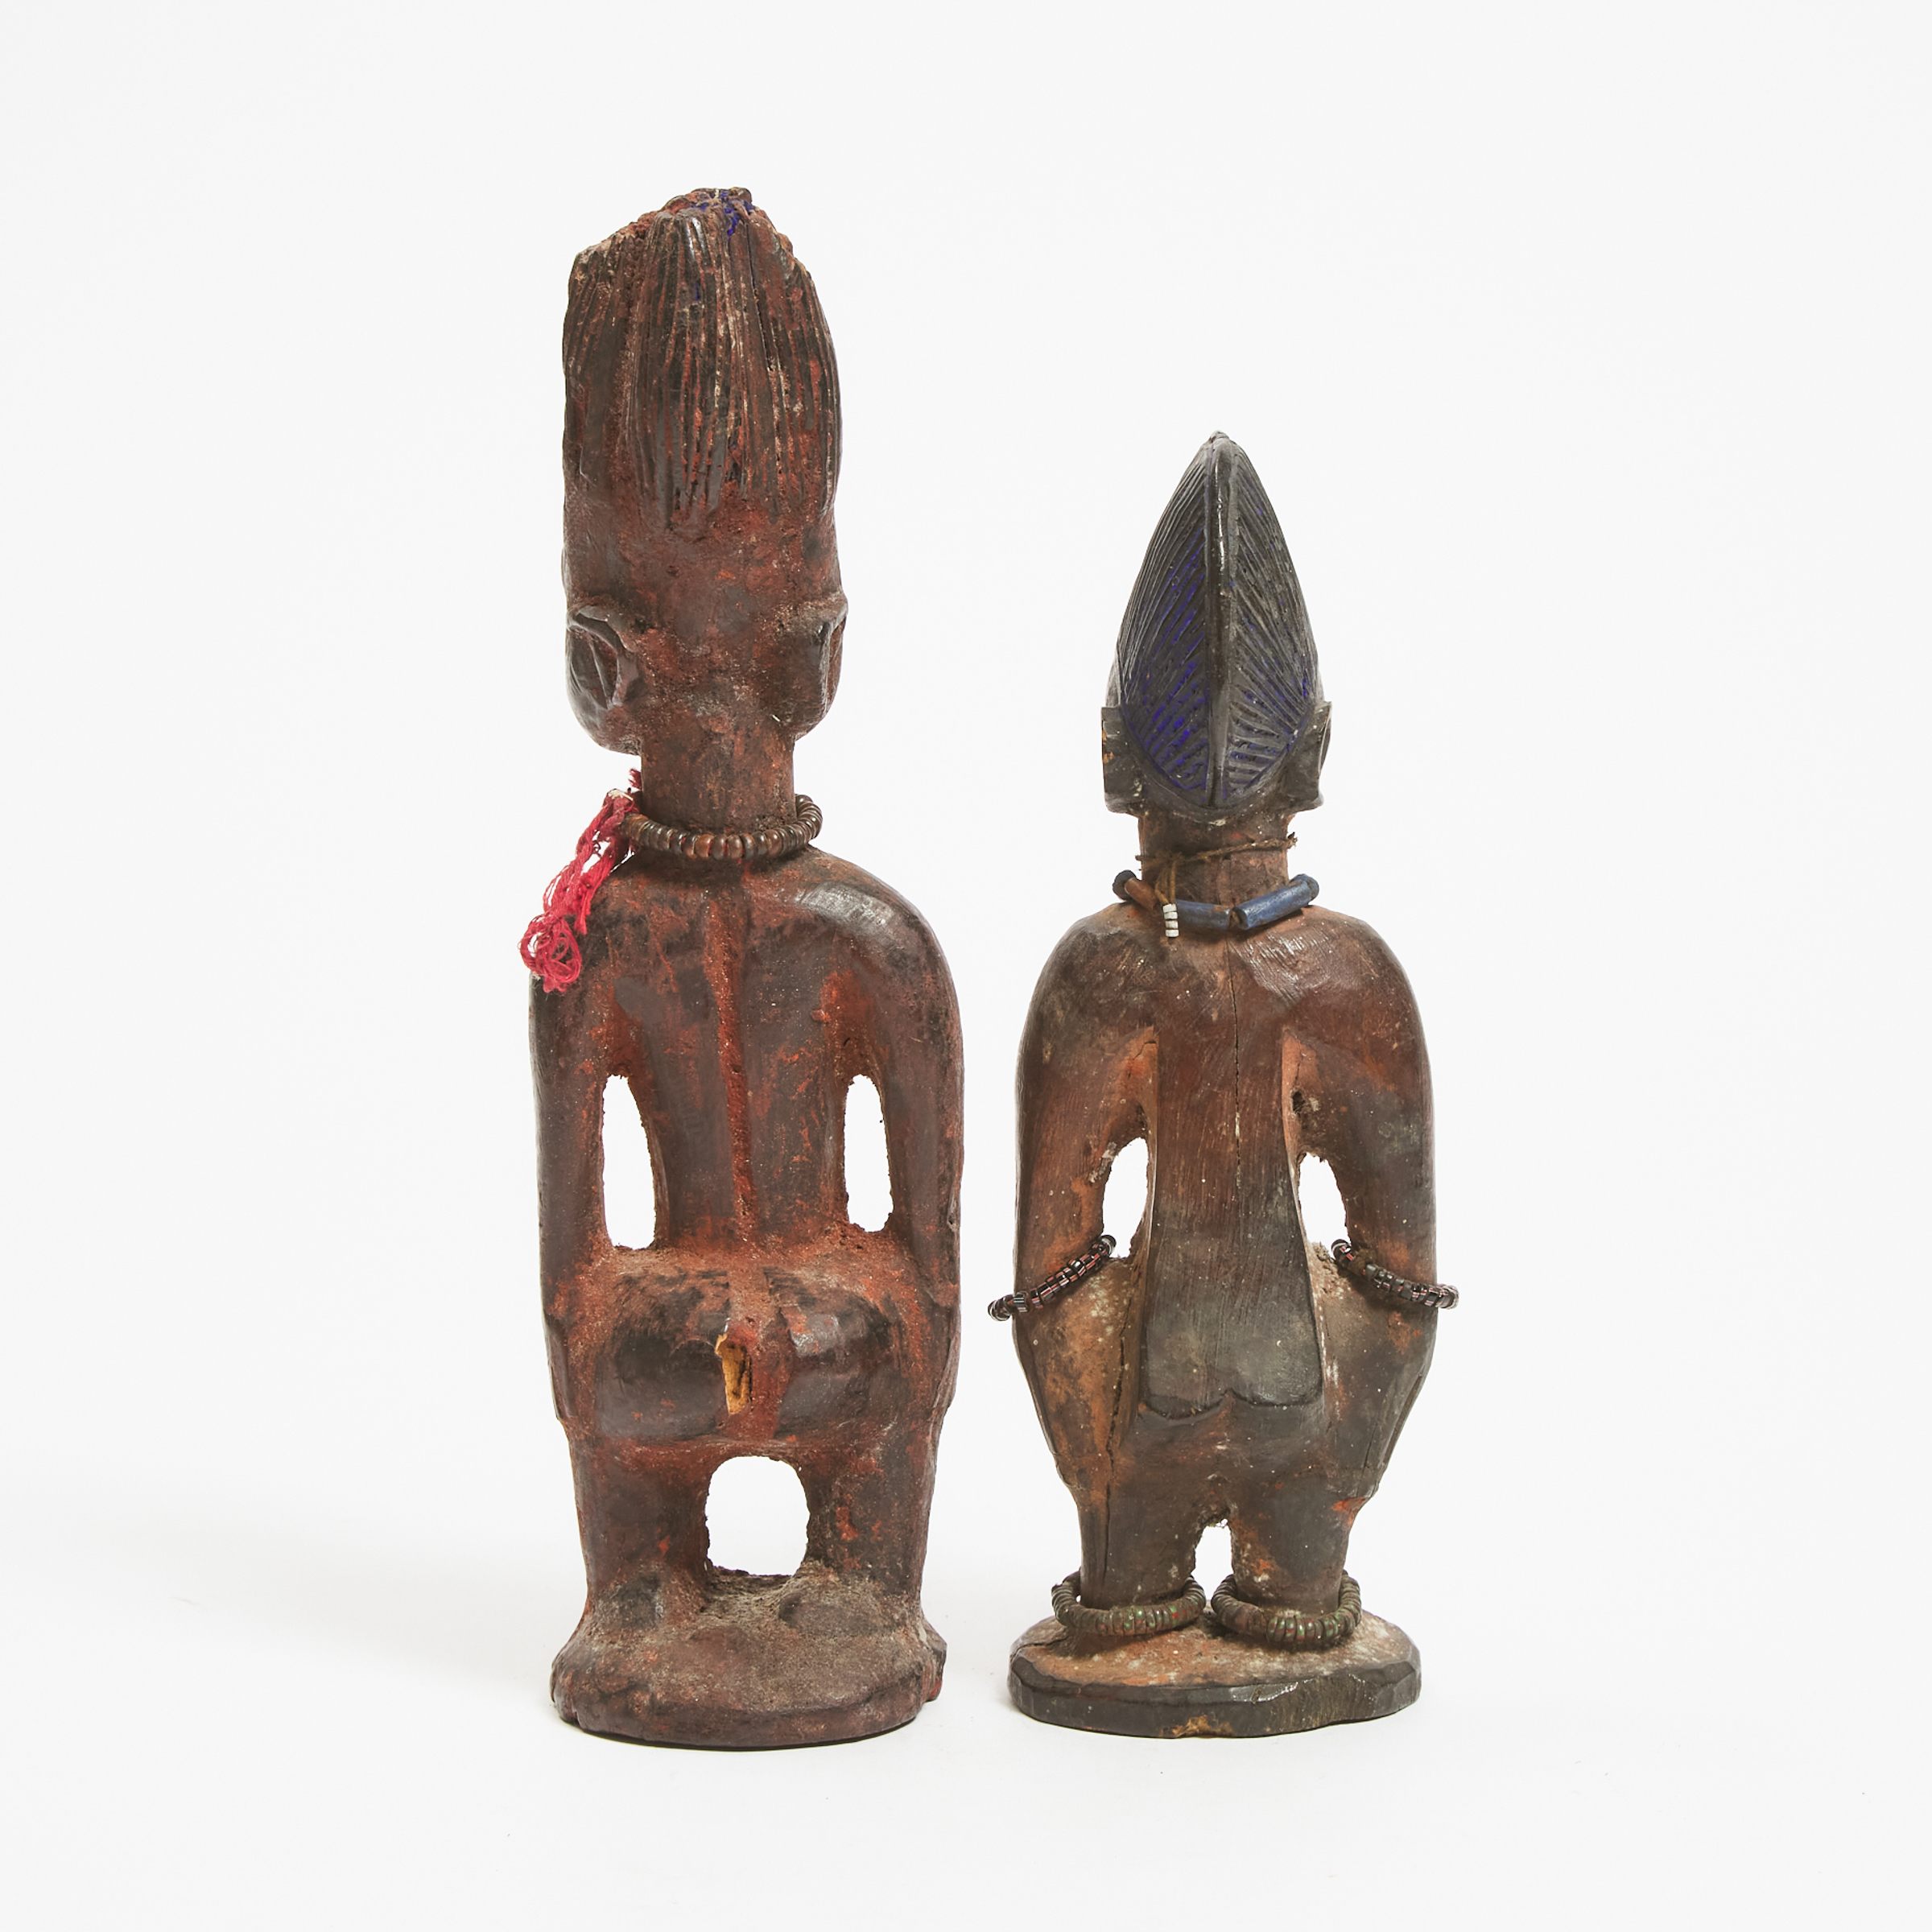 Two Yoruba Ibeji Figures, Nigeria, West Africa, early to mid 20th century